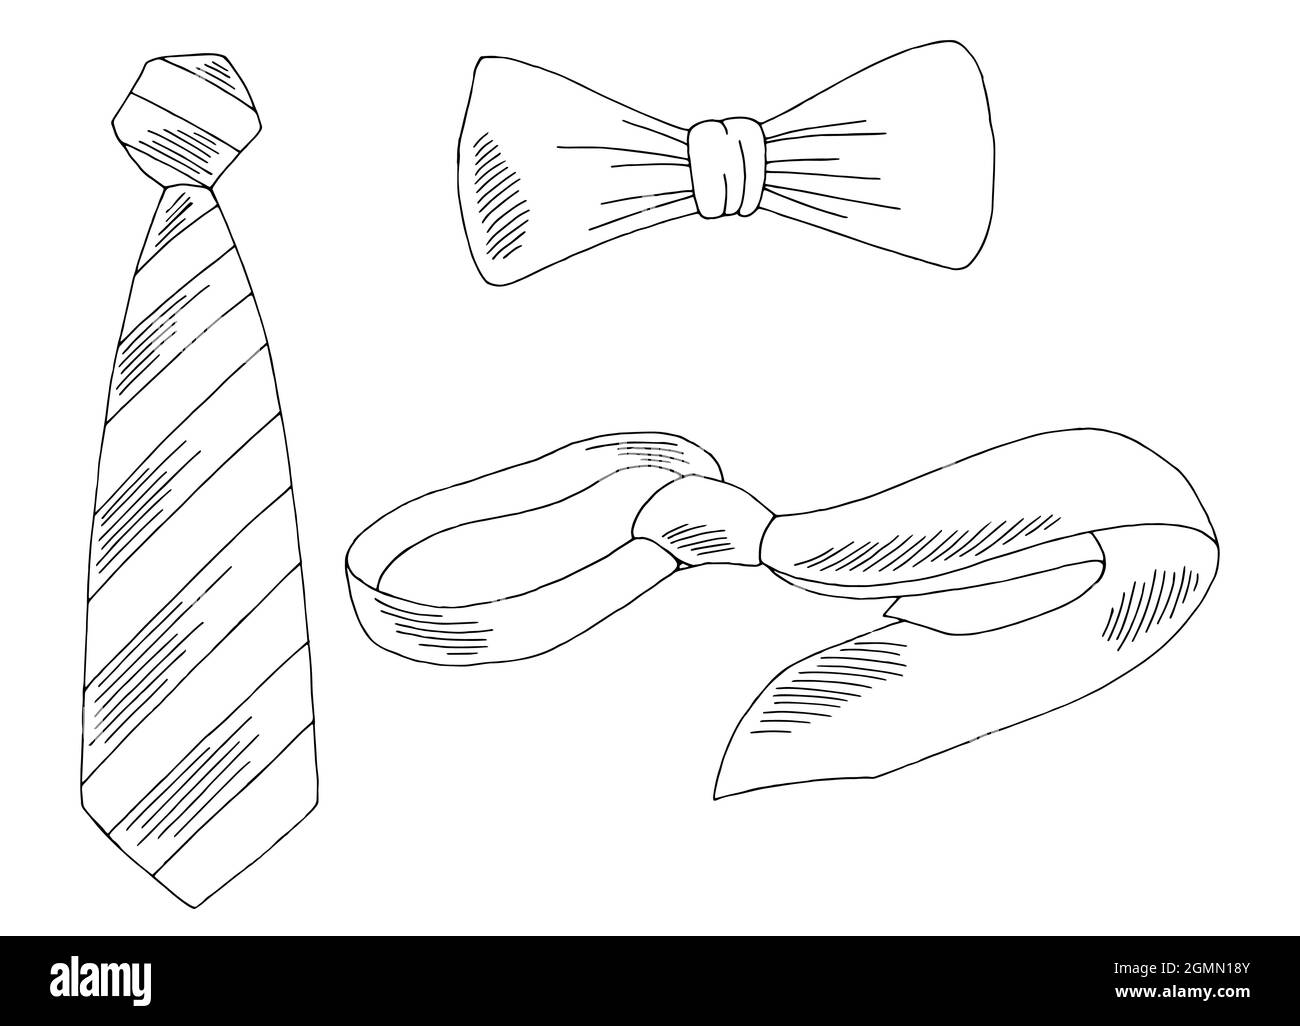 Krawatte Set Grafik schwarz weiß isoliert Skizze Illustration Vektor Stock Vektor